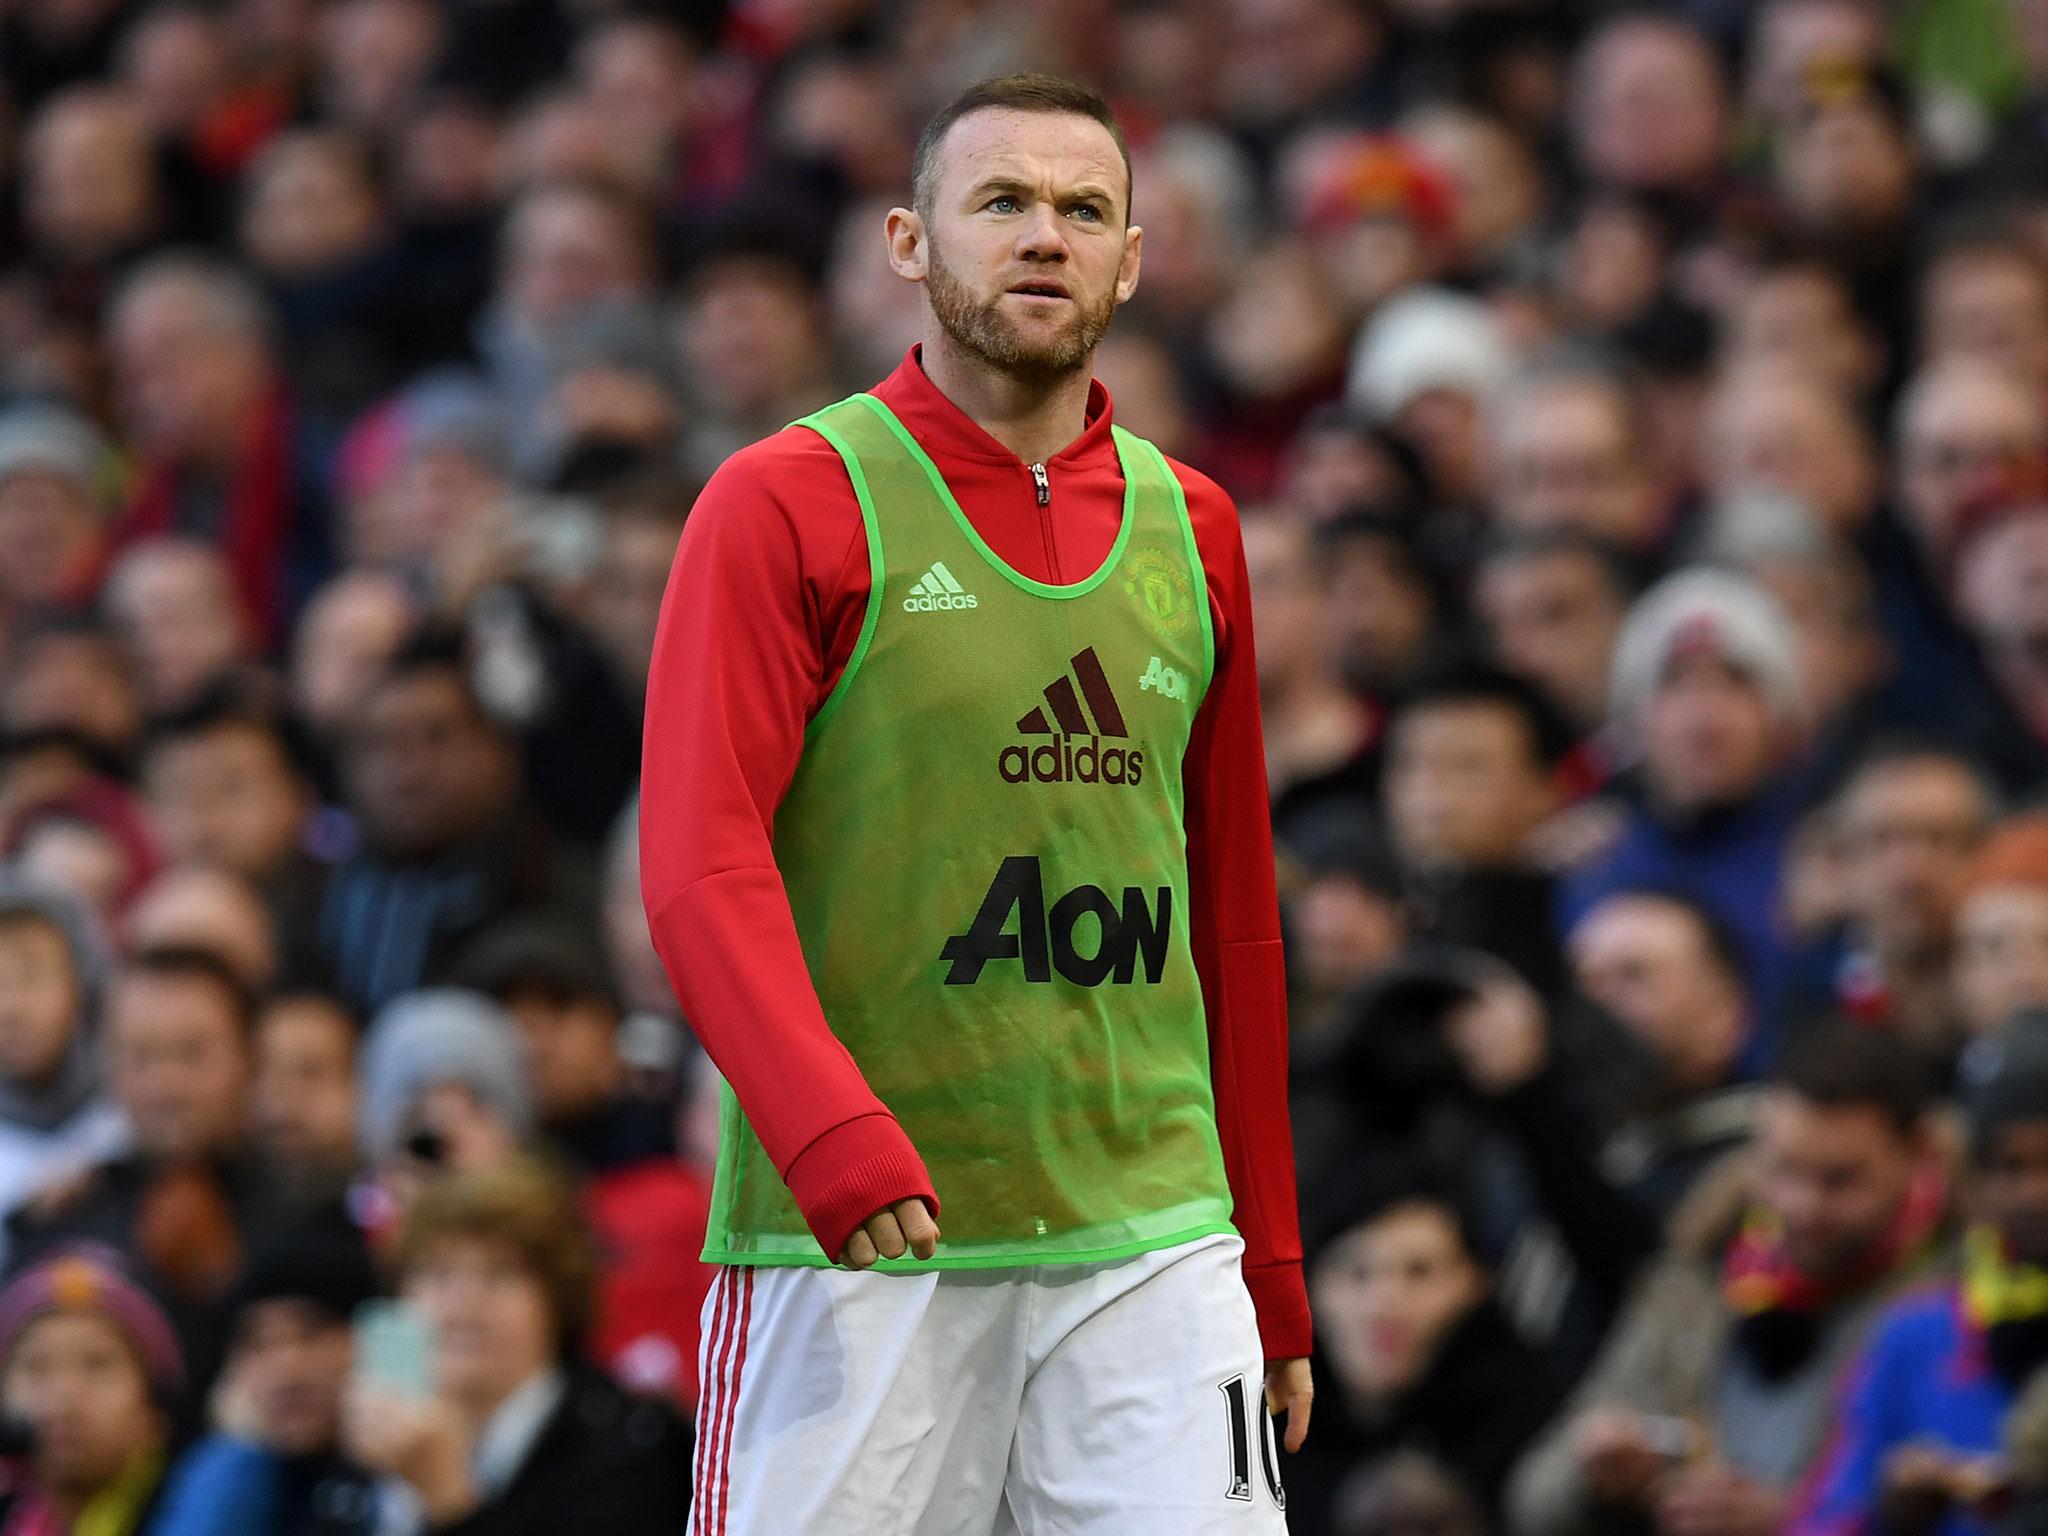 Rooney has endured a tough season under Jose Mourinho